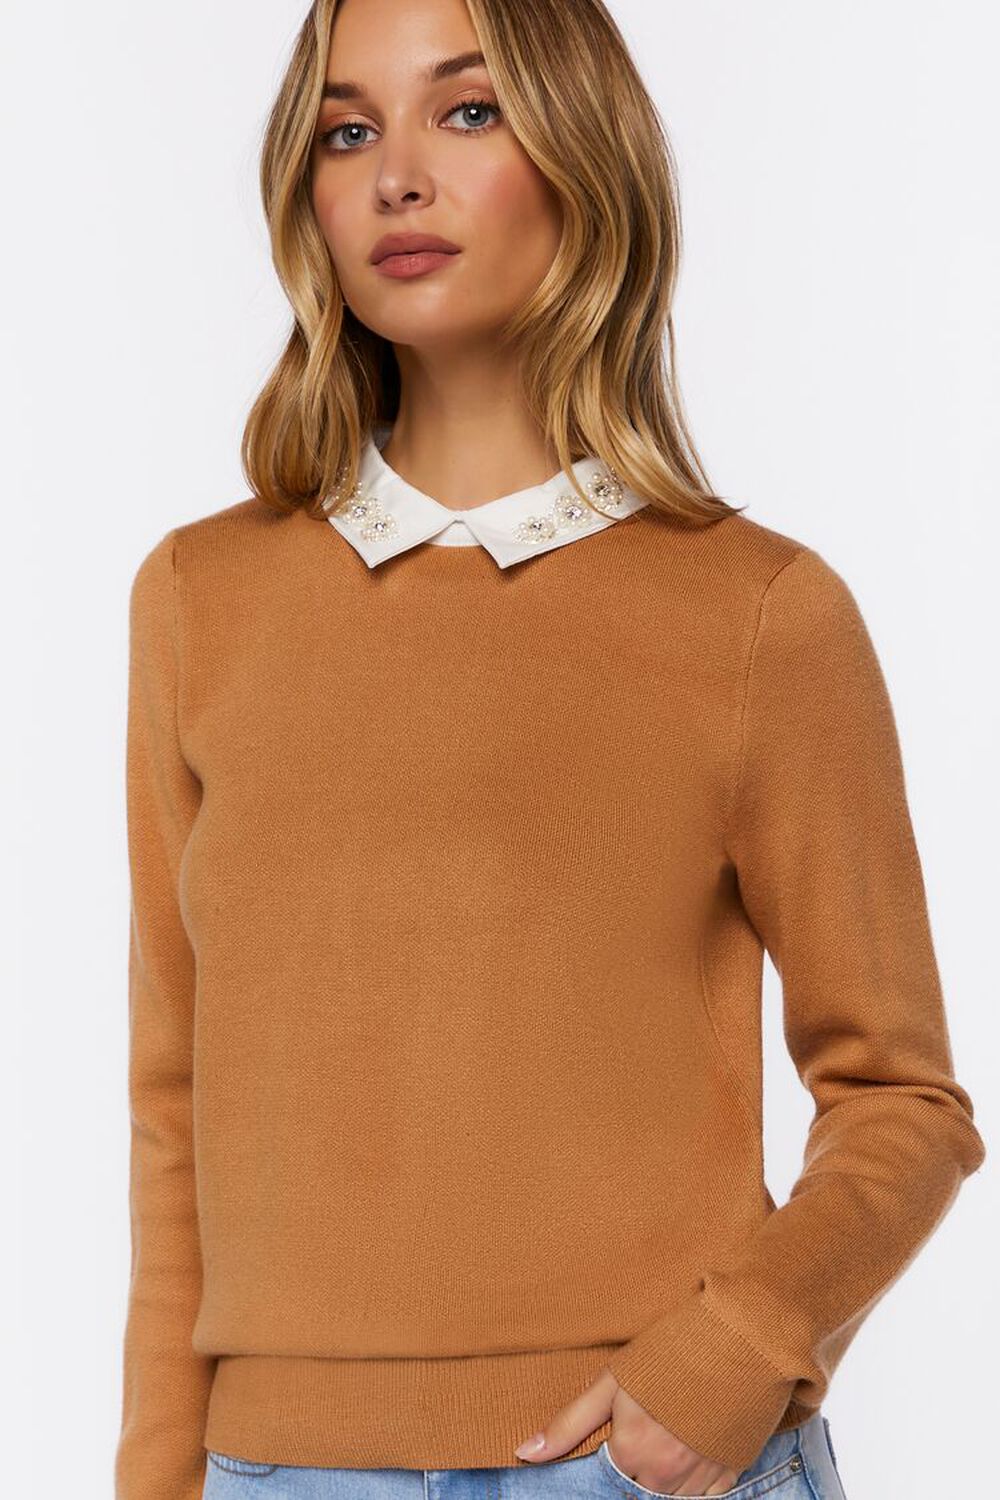 CAMEL/WHITE Faux Gem-Collar Sweater, image 1